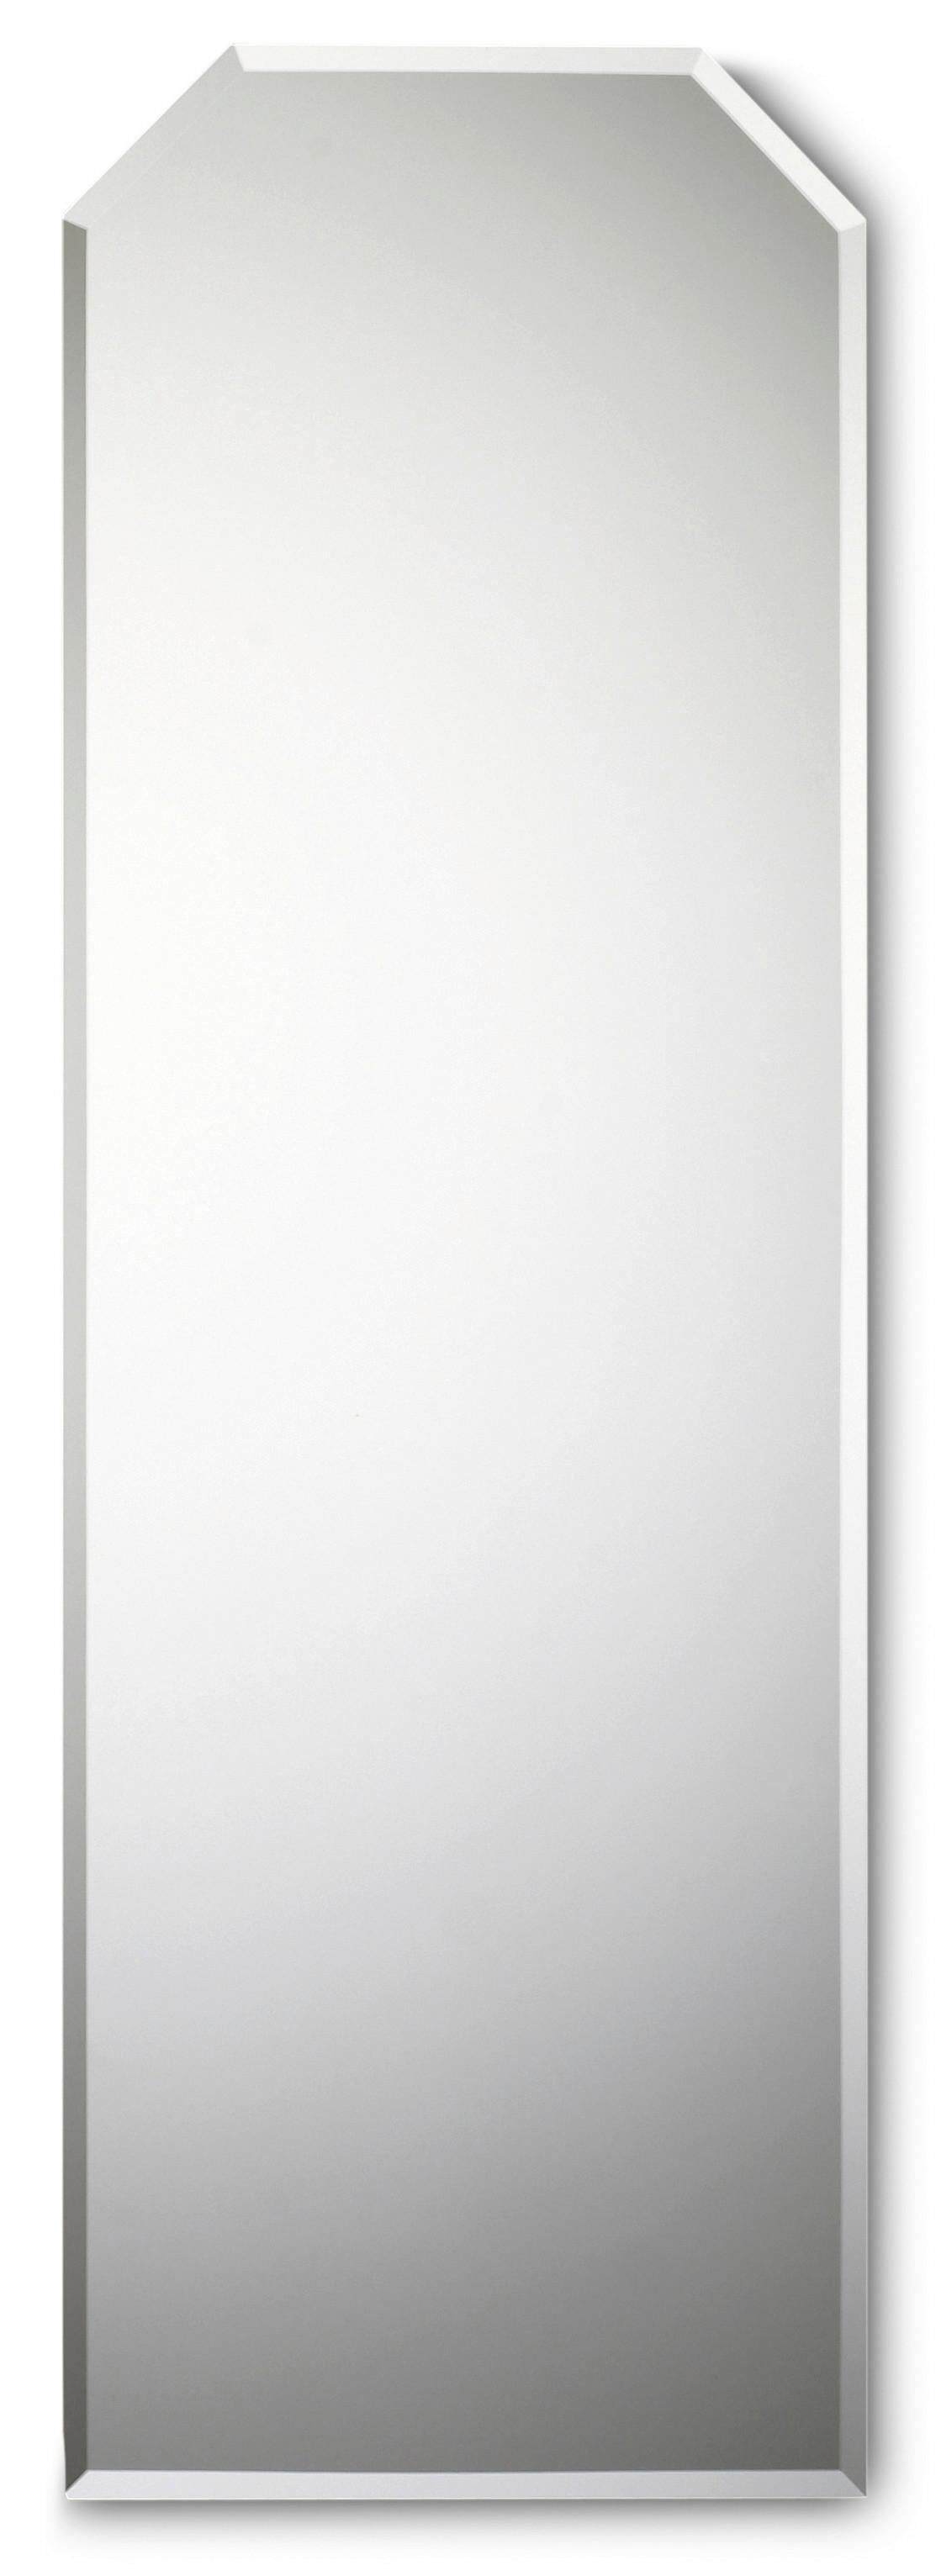 Wandspiegel Granat 108-065 - MODERN, Glas (30/90cm) - Ondega